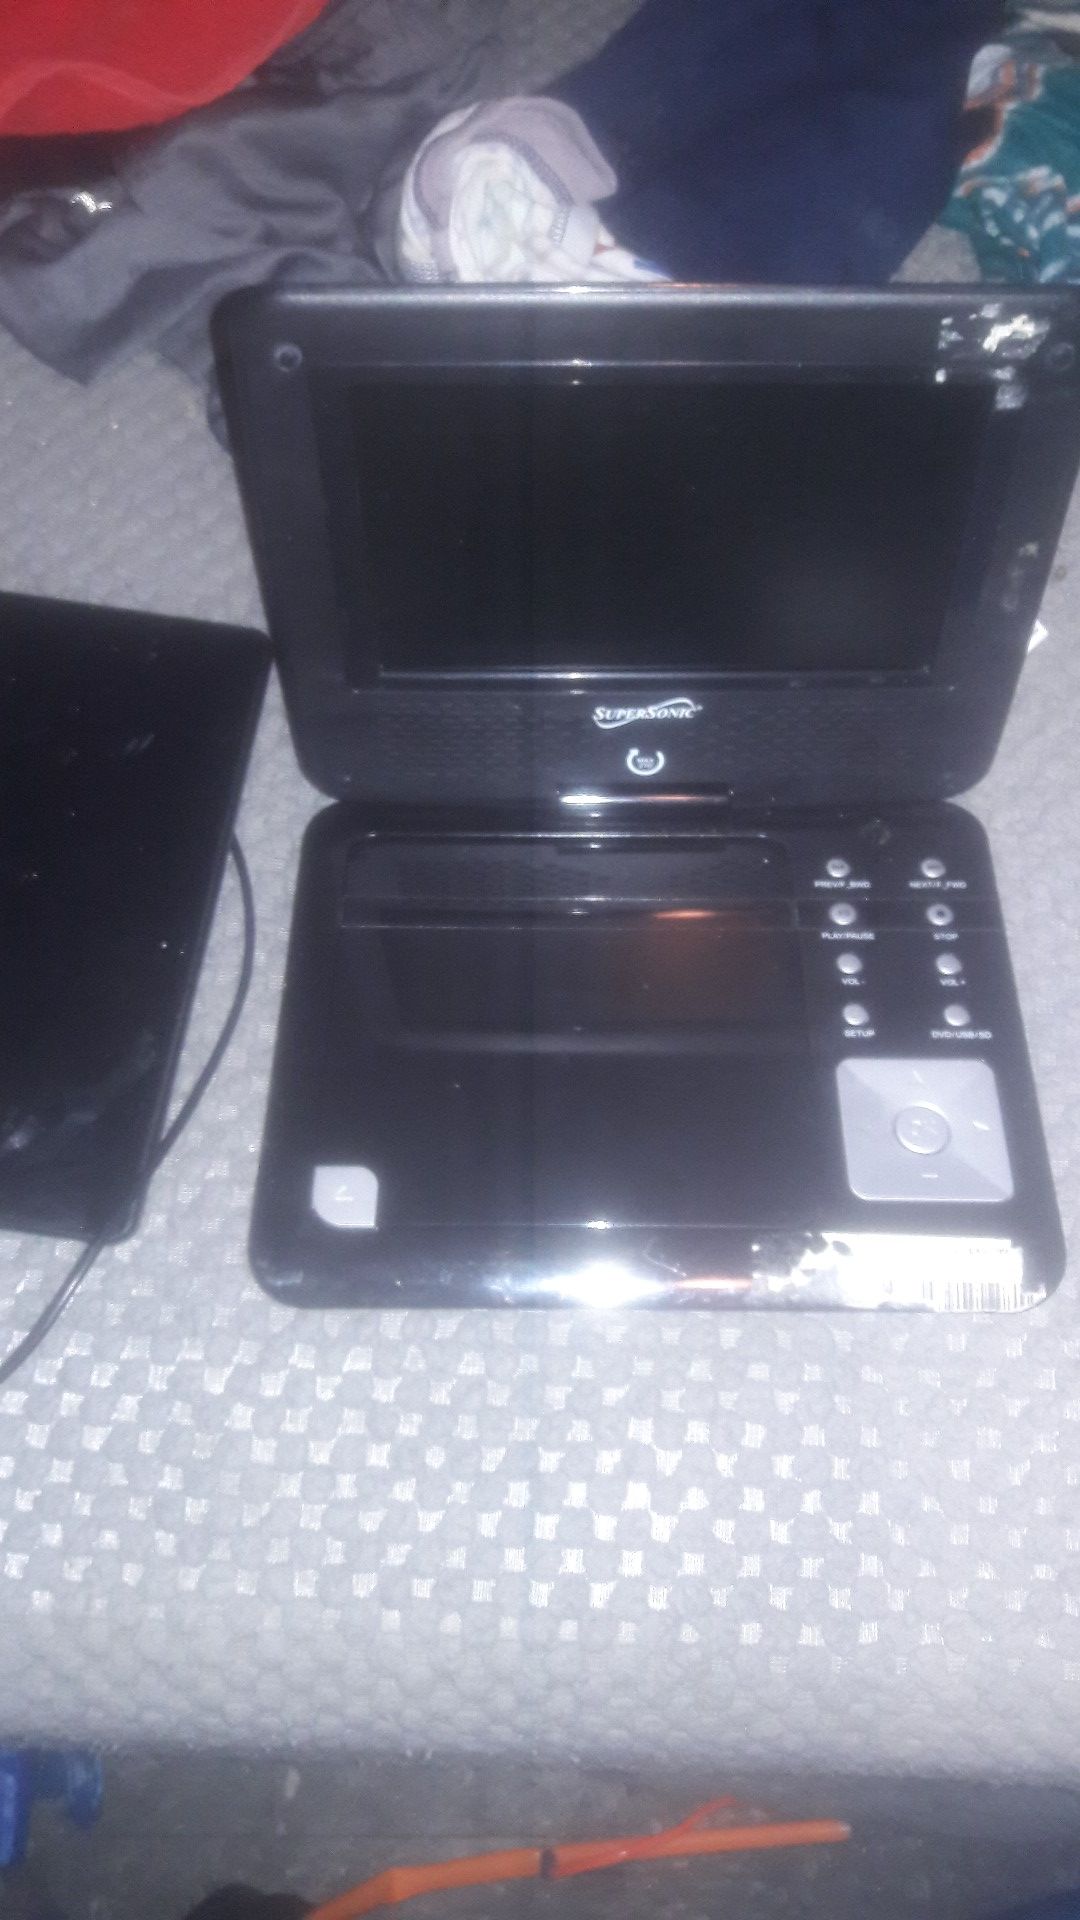 Portable dvd player